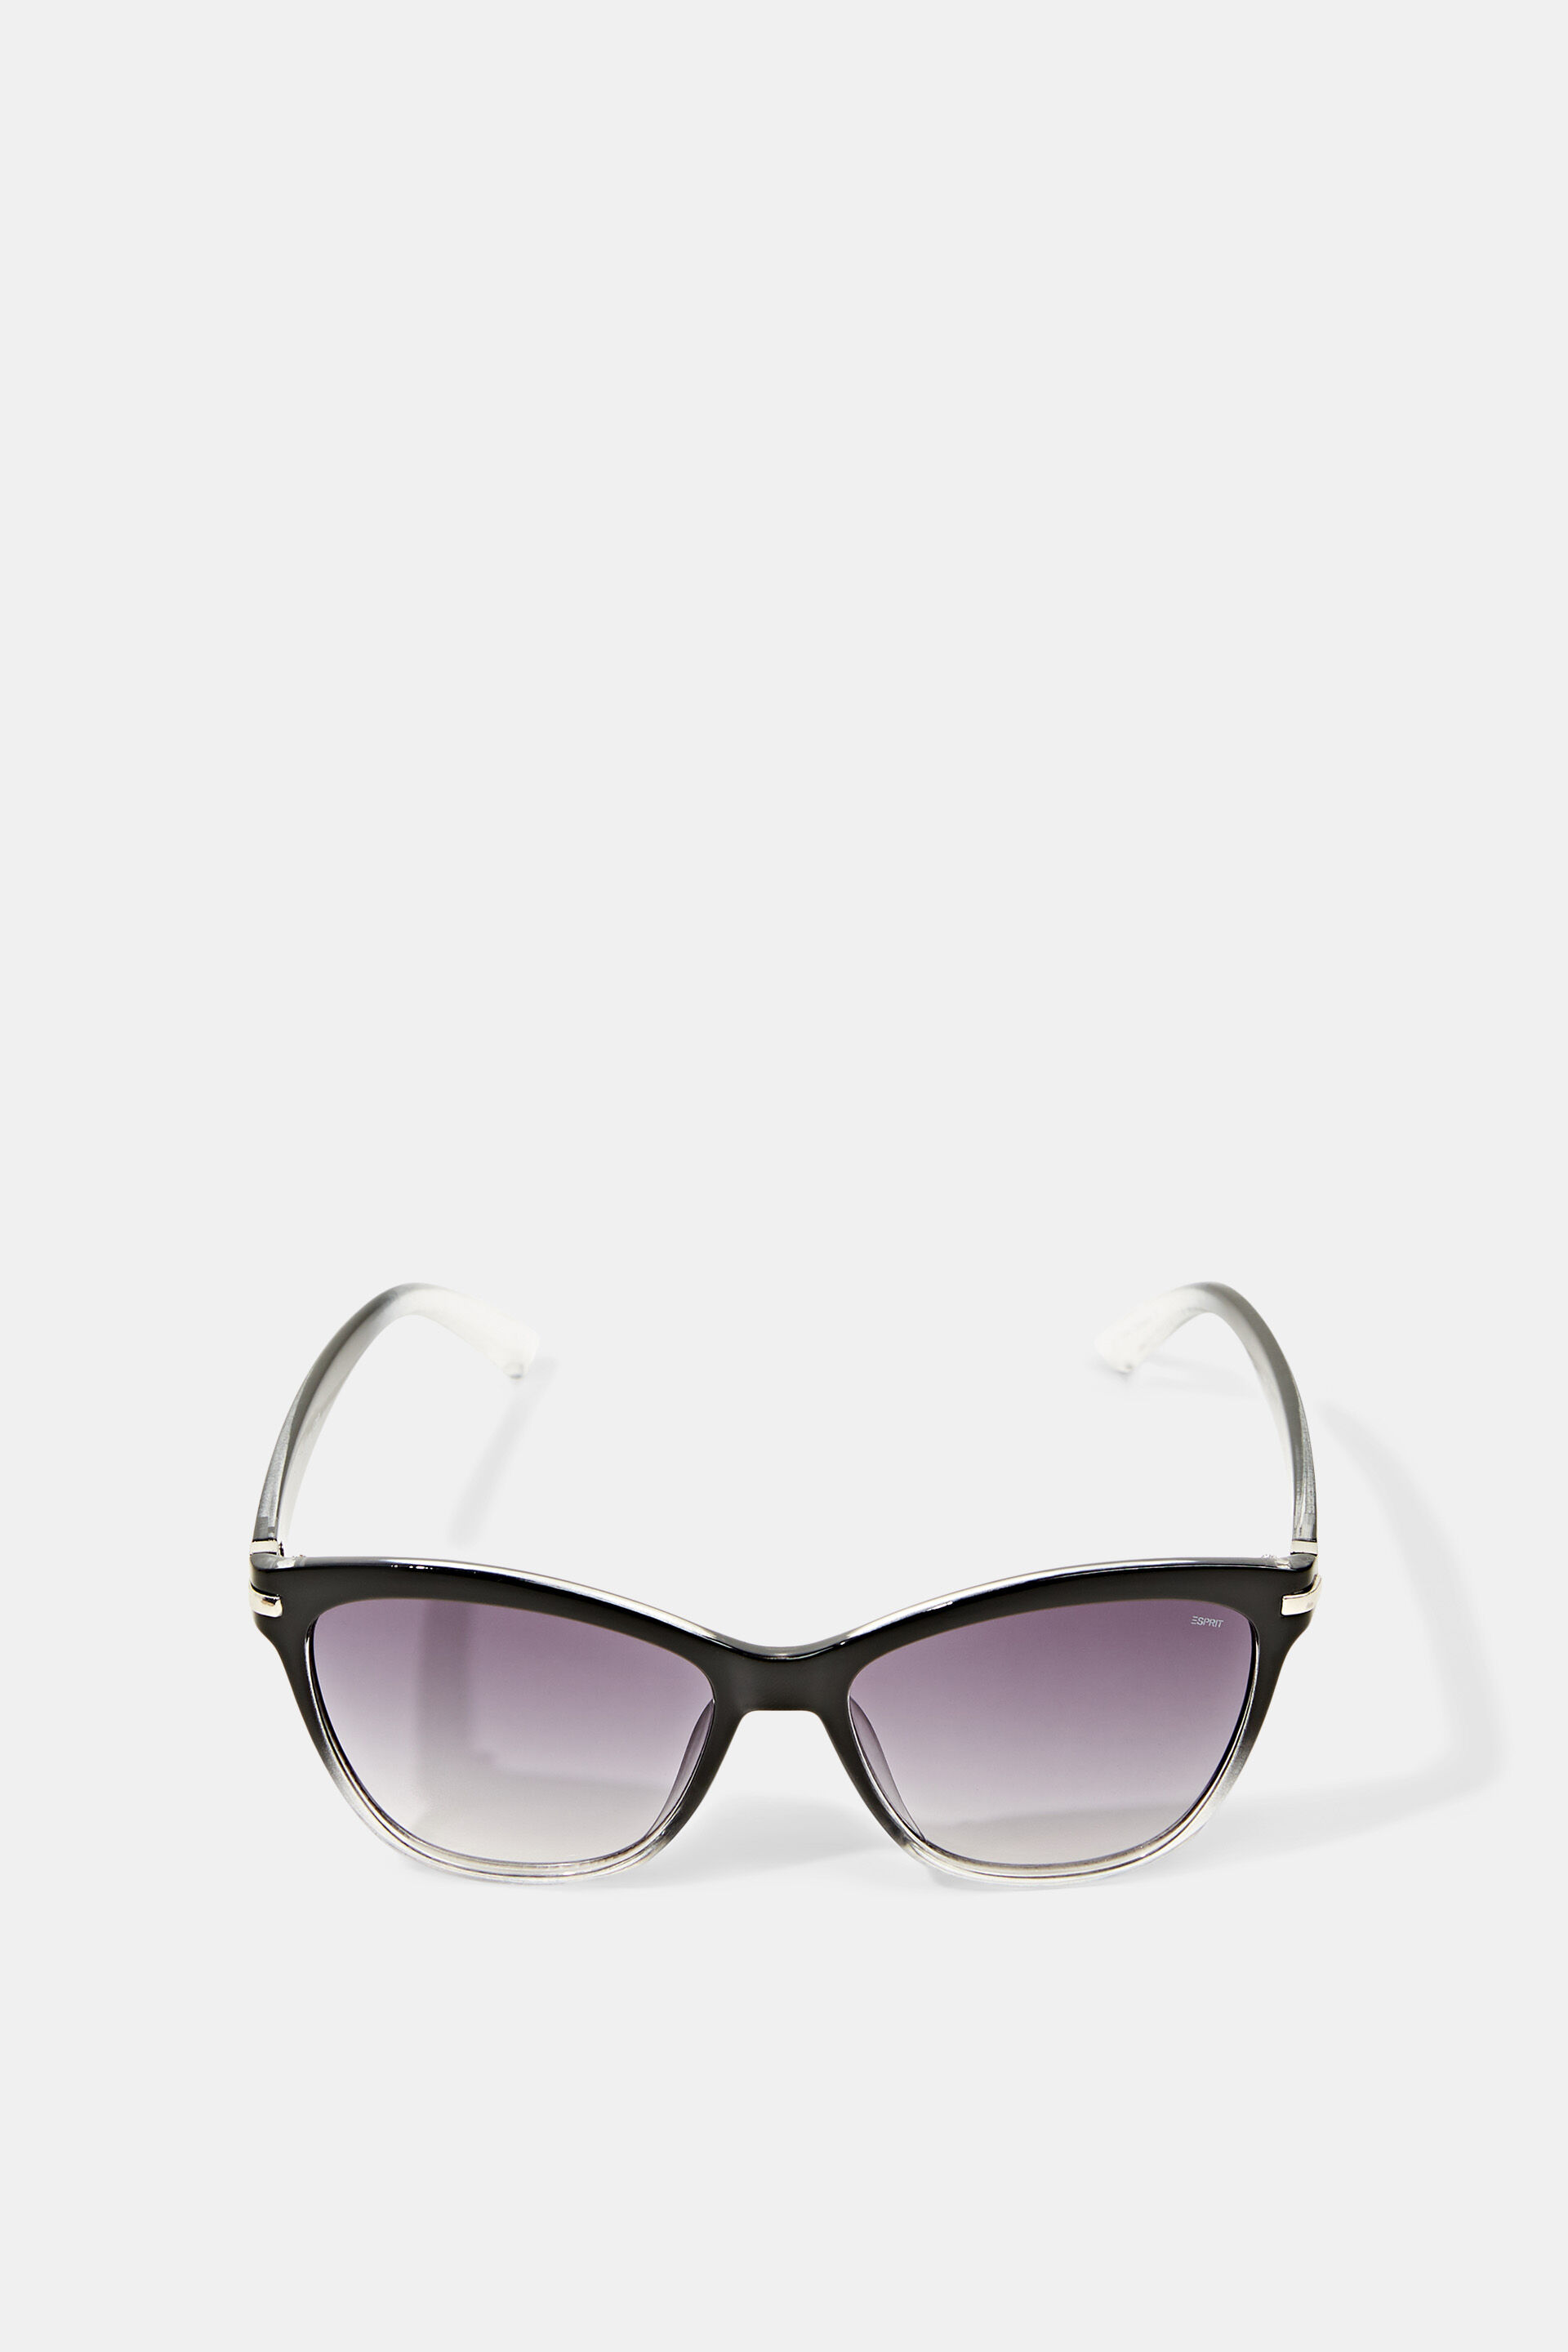 Esprit Sunglasses details with metal